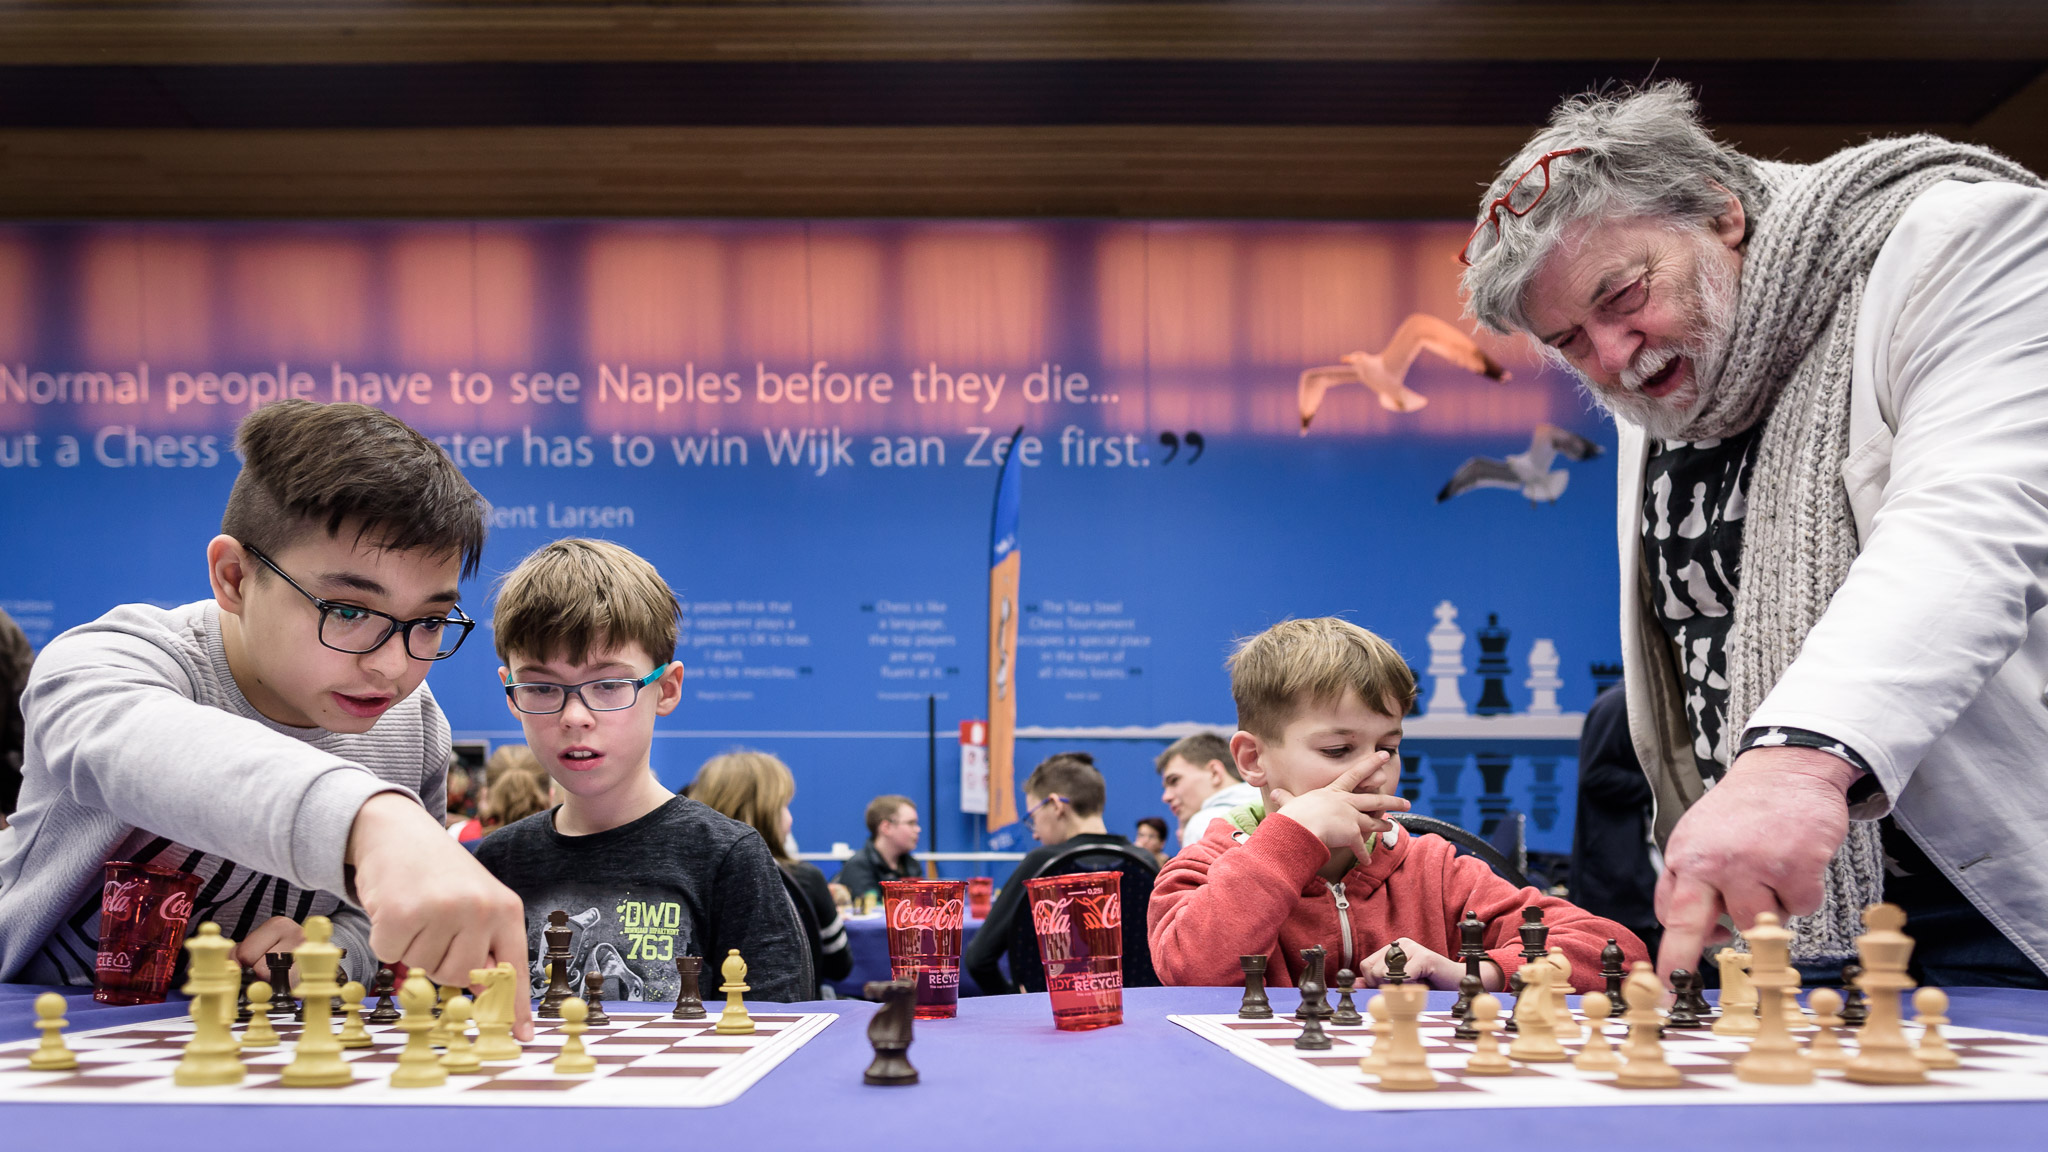 Chess photography at Wijk aan Zee (1/2) ChessBase